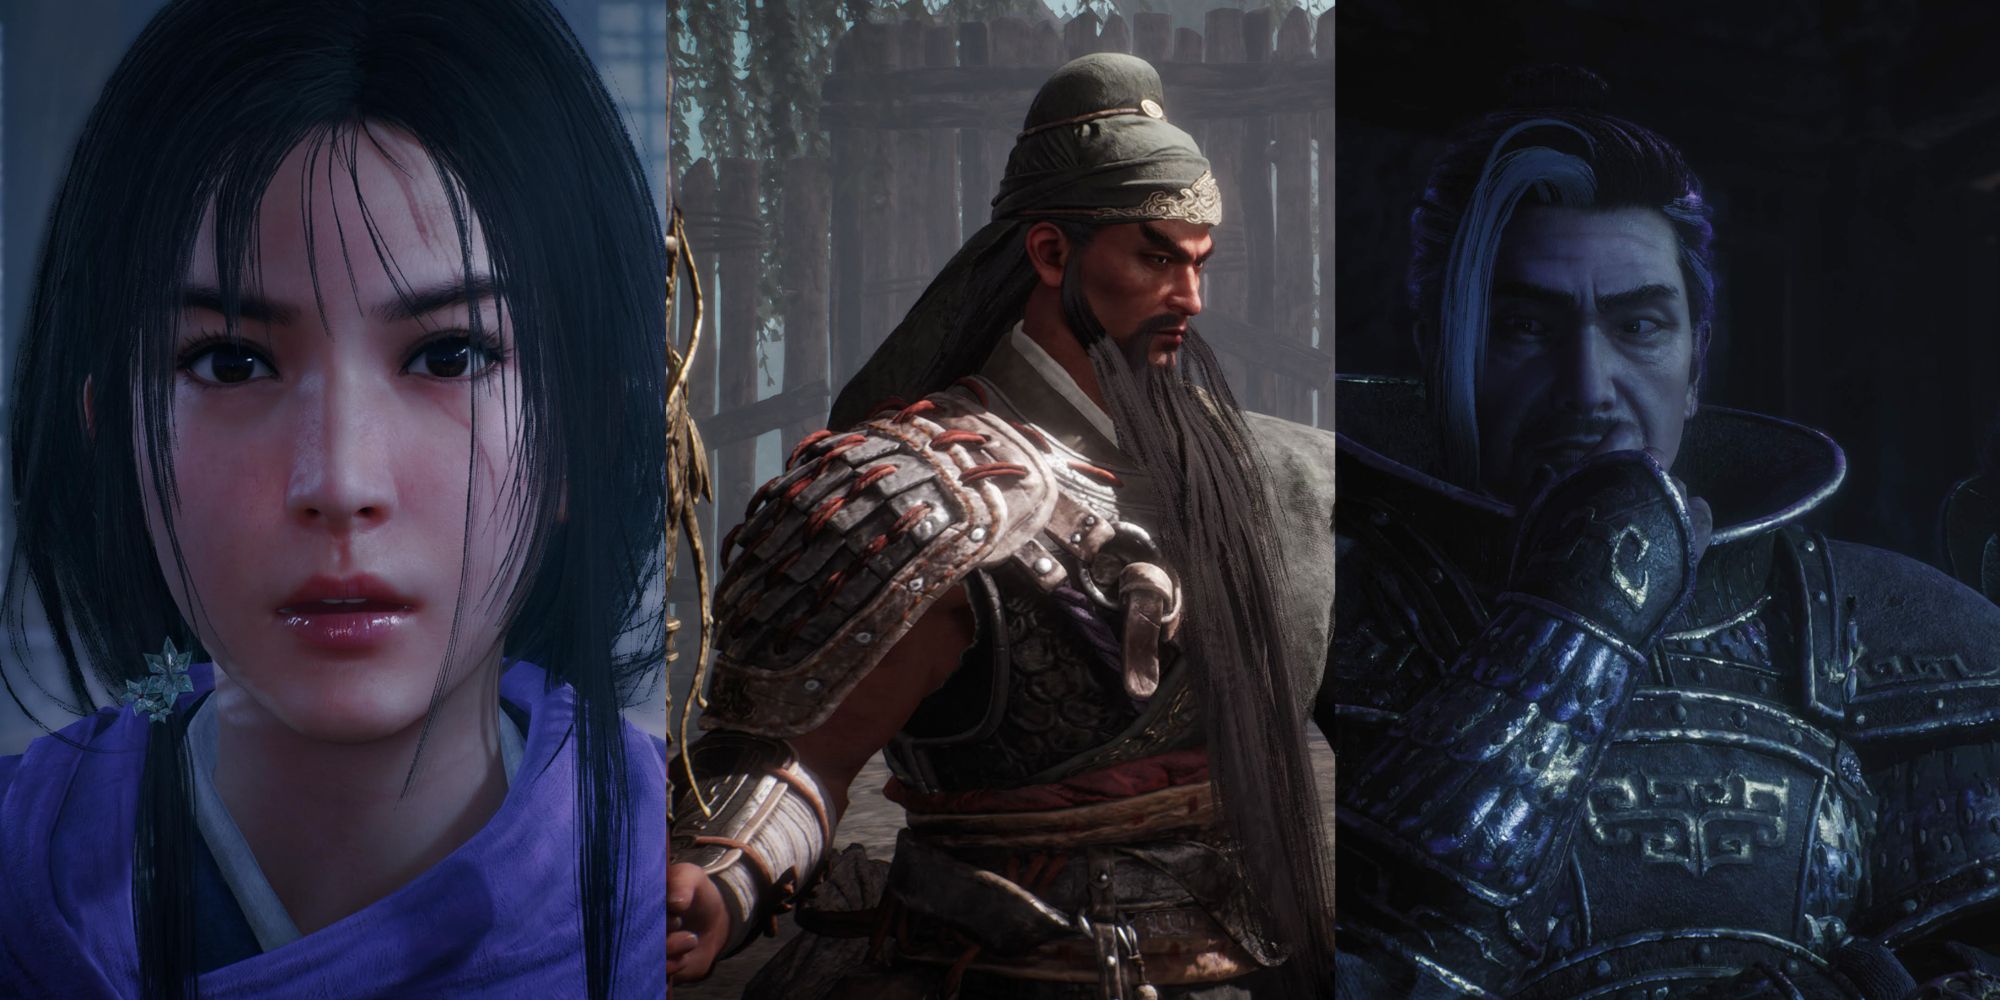 Three images. From left to right: Lady Zhen, Guan Yu, Yuan Shao from Wo Long: Fallen Dynasty